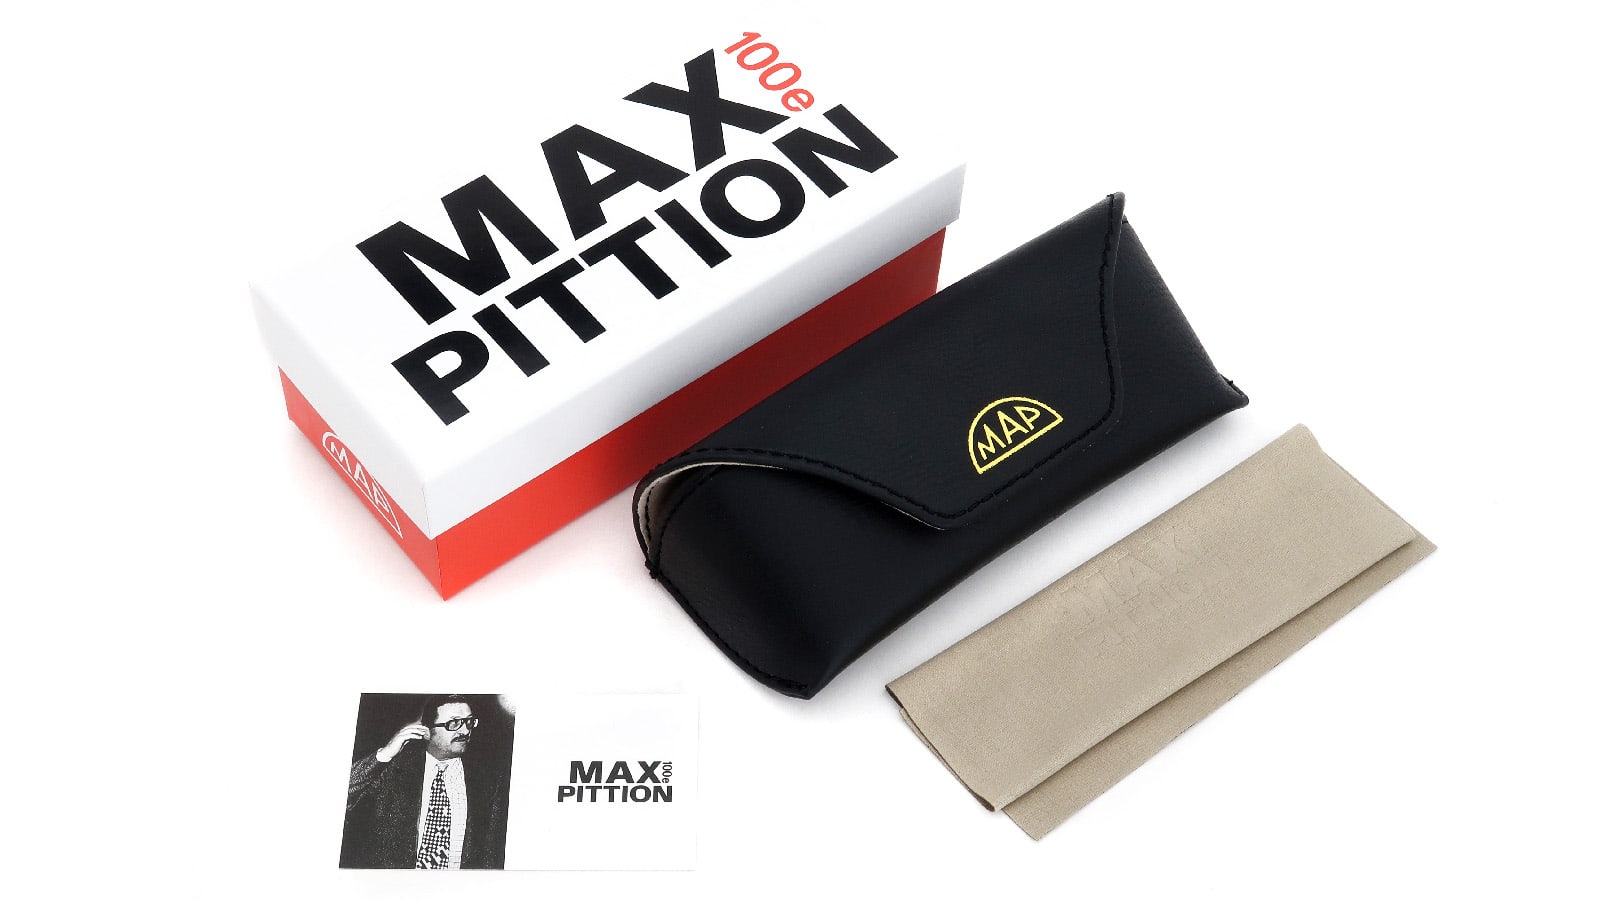 MAX PITTION V WELLINGTON (MXPL-003B) RUBY ROUGE 15